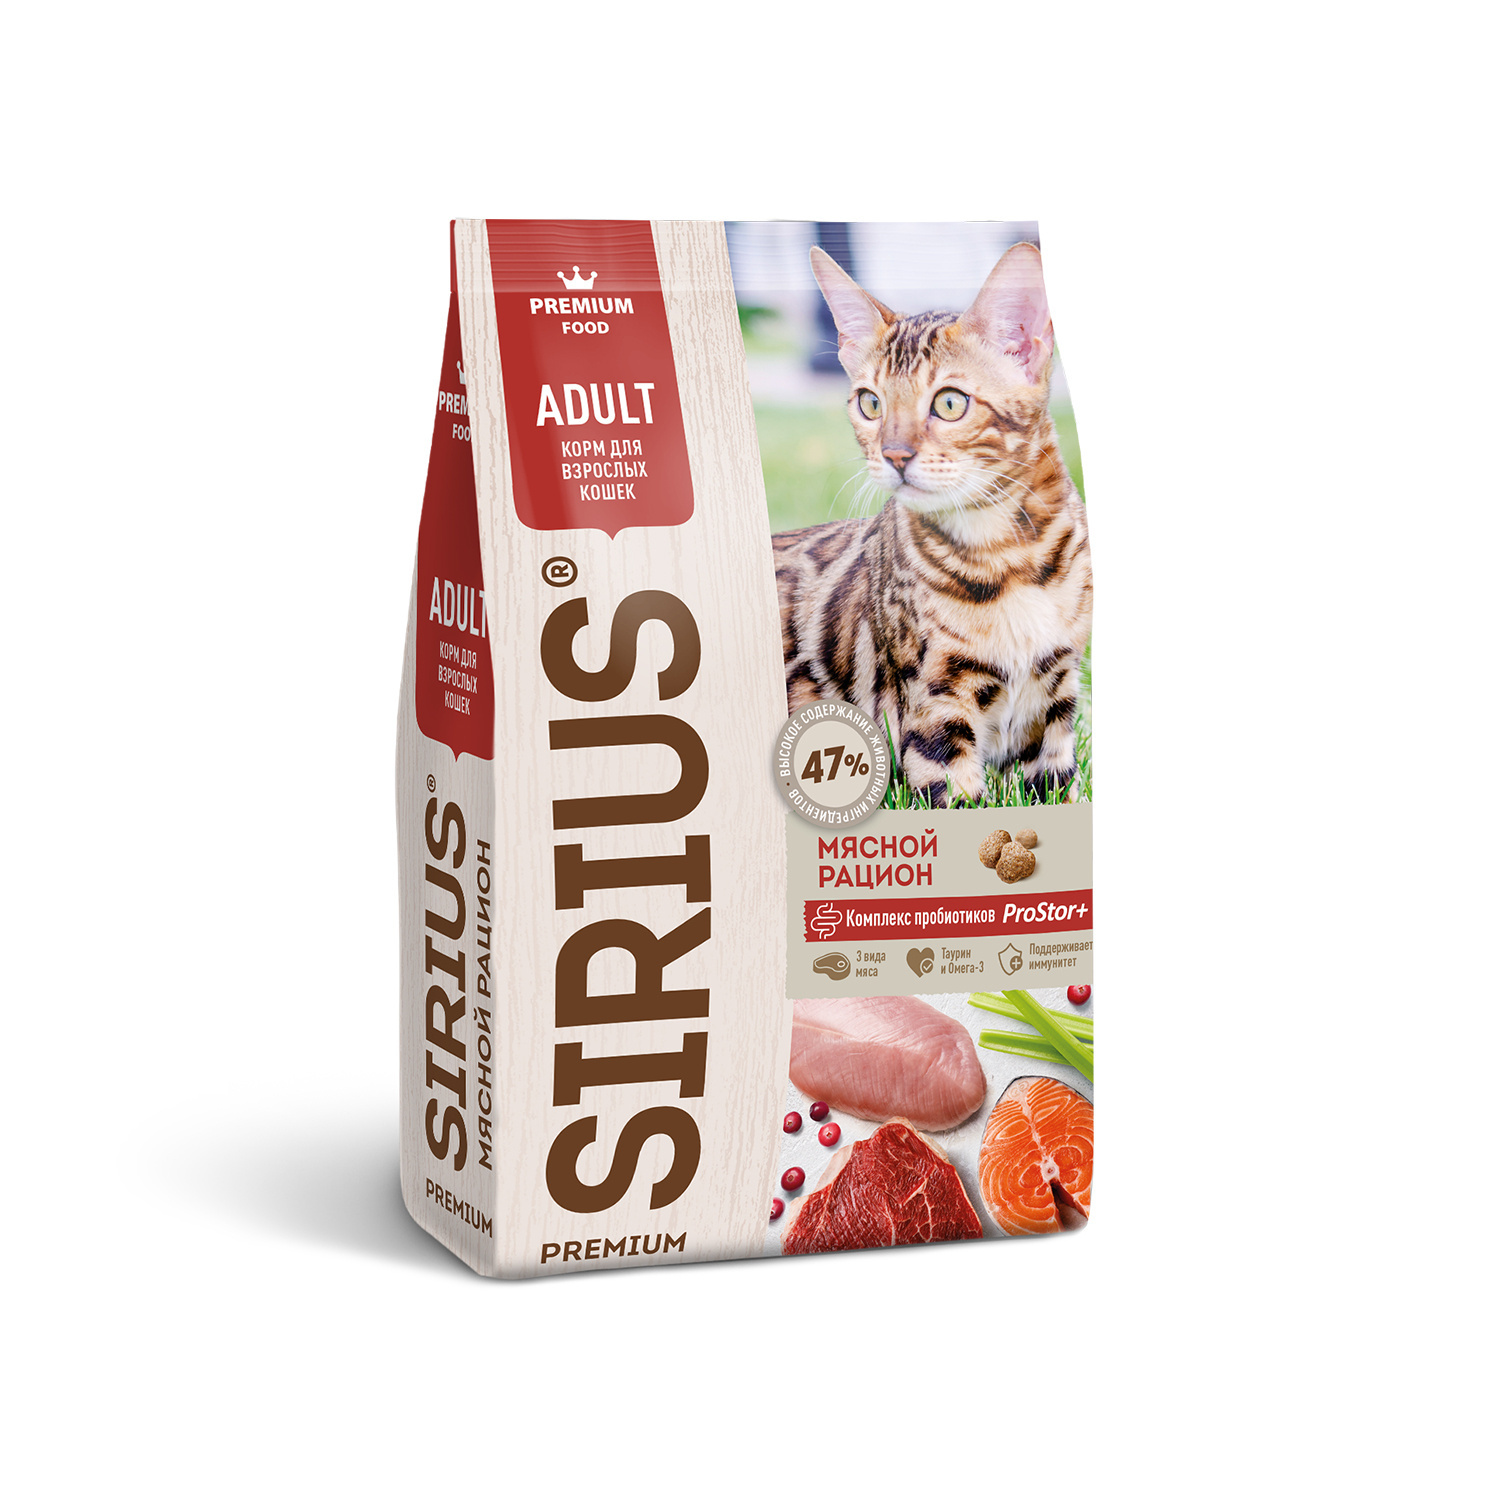 Sirius сухой корм для кошек, мясной рацион (400 г) Sirius сухой корм для кошек, мясной рацион (400 г) - фото 1